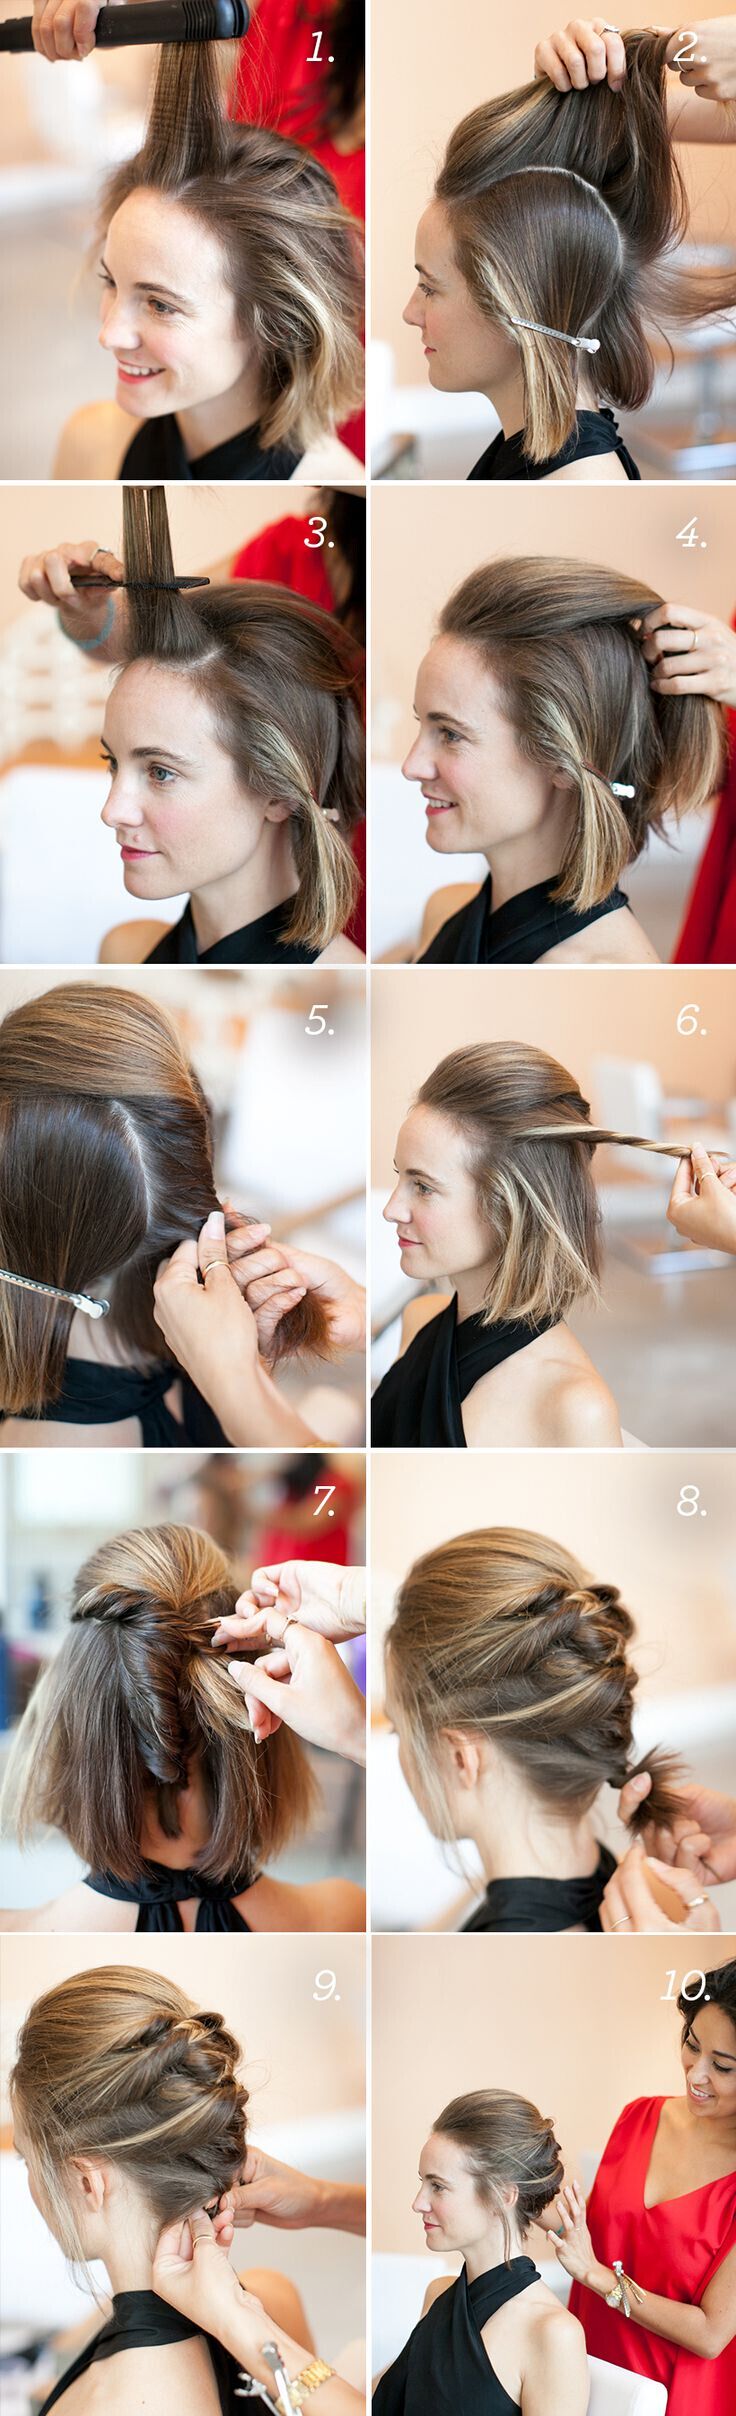 5 Easy to follow short hair tutorials - Reader's Digest